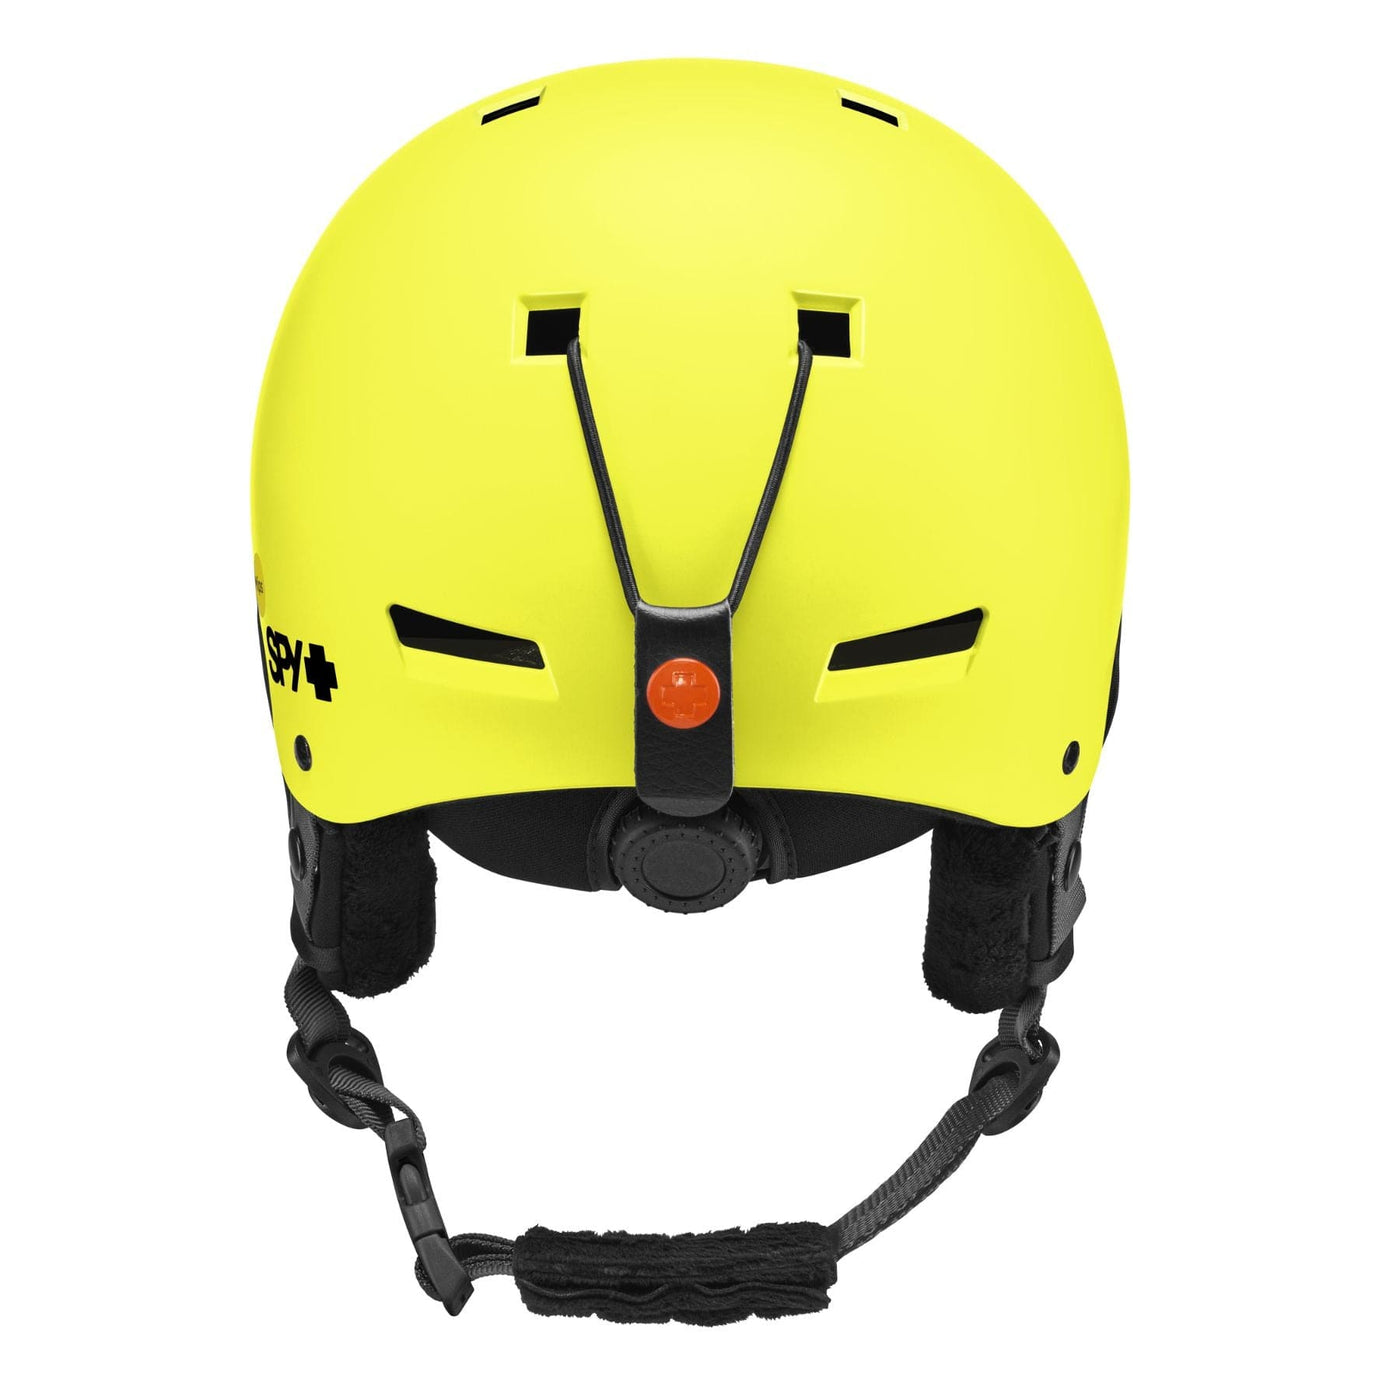 Youth Snowboard Helmet - Yellow